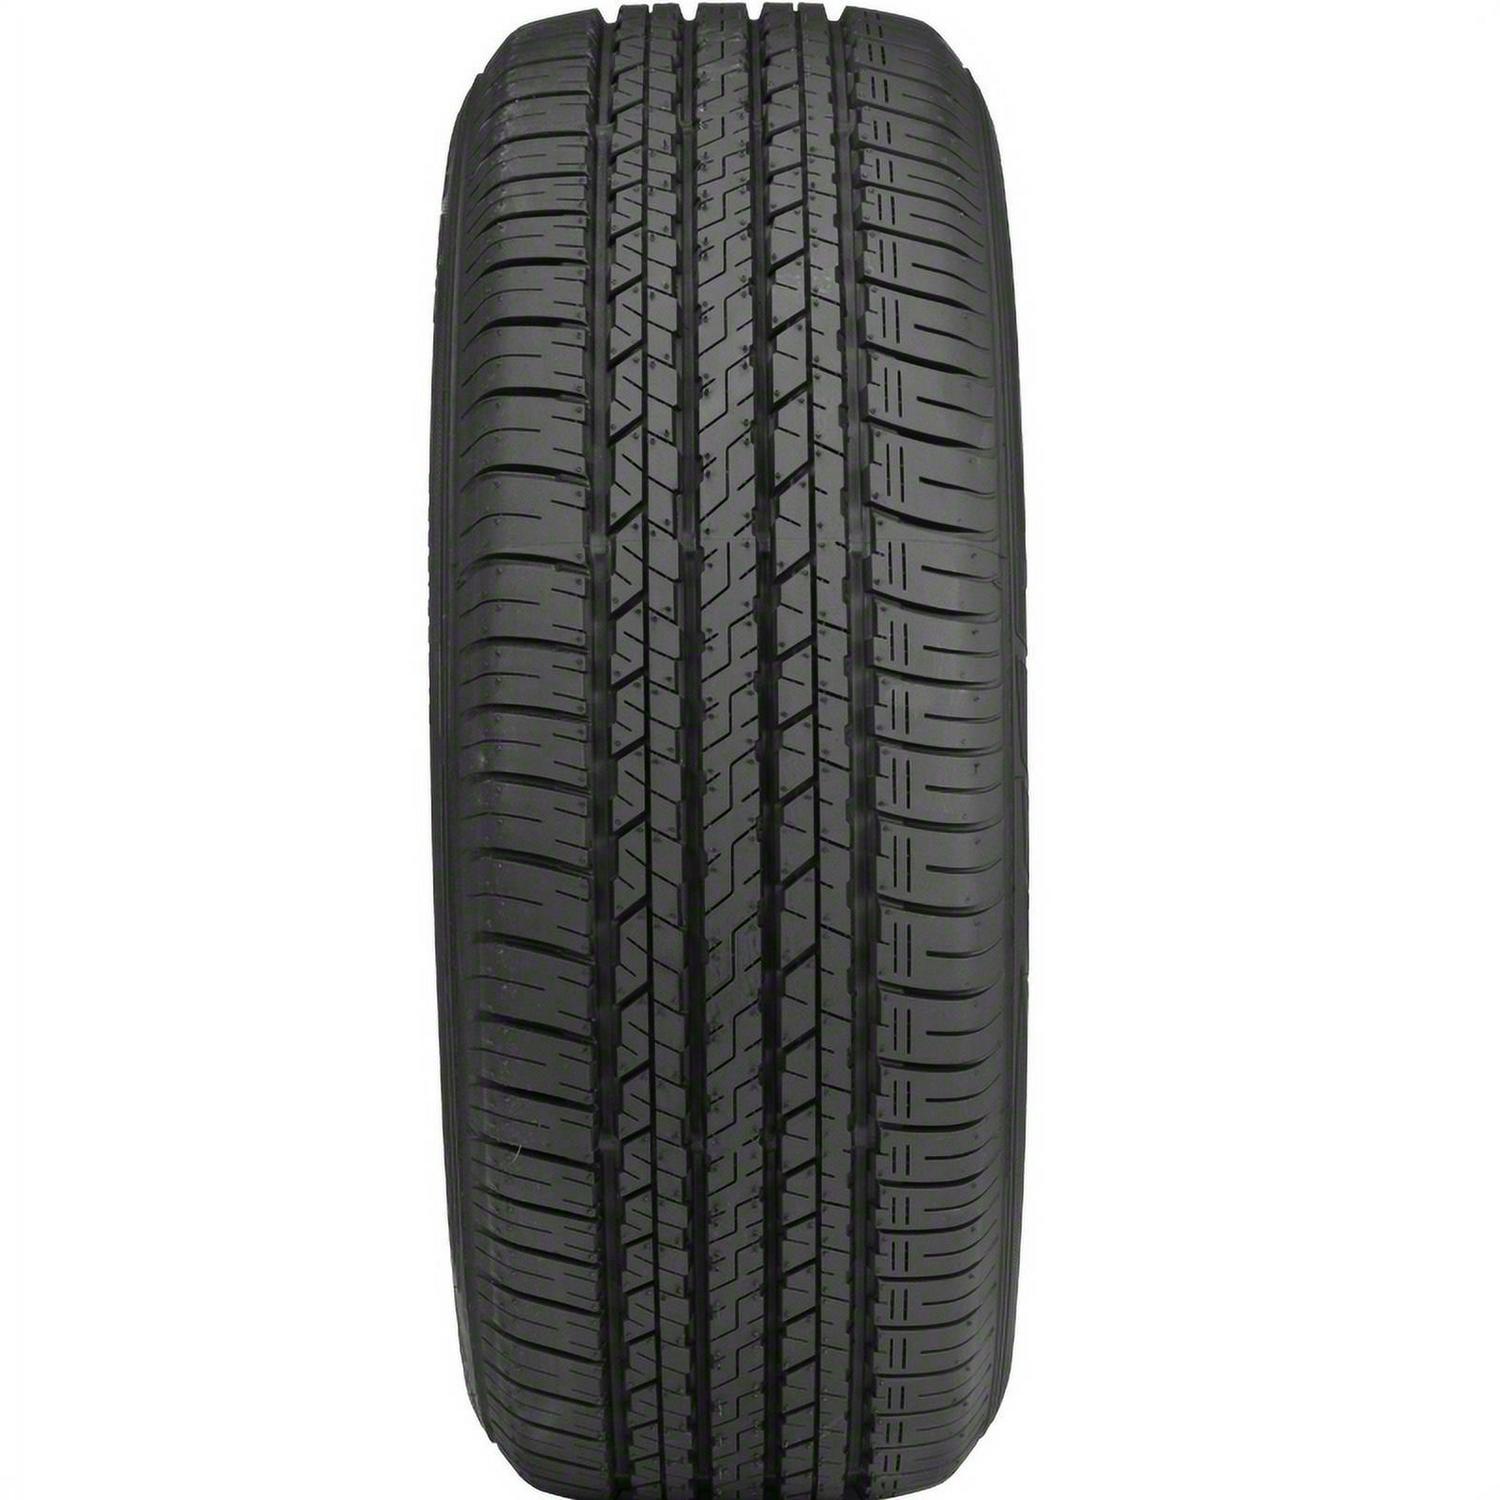 Dunlop SP Sport 7000 A/S 235/45R18 94V All Season Performance Tire